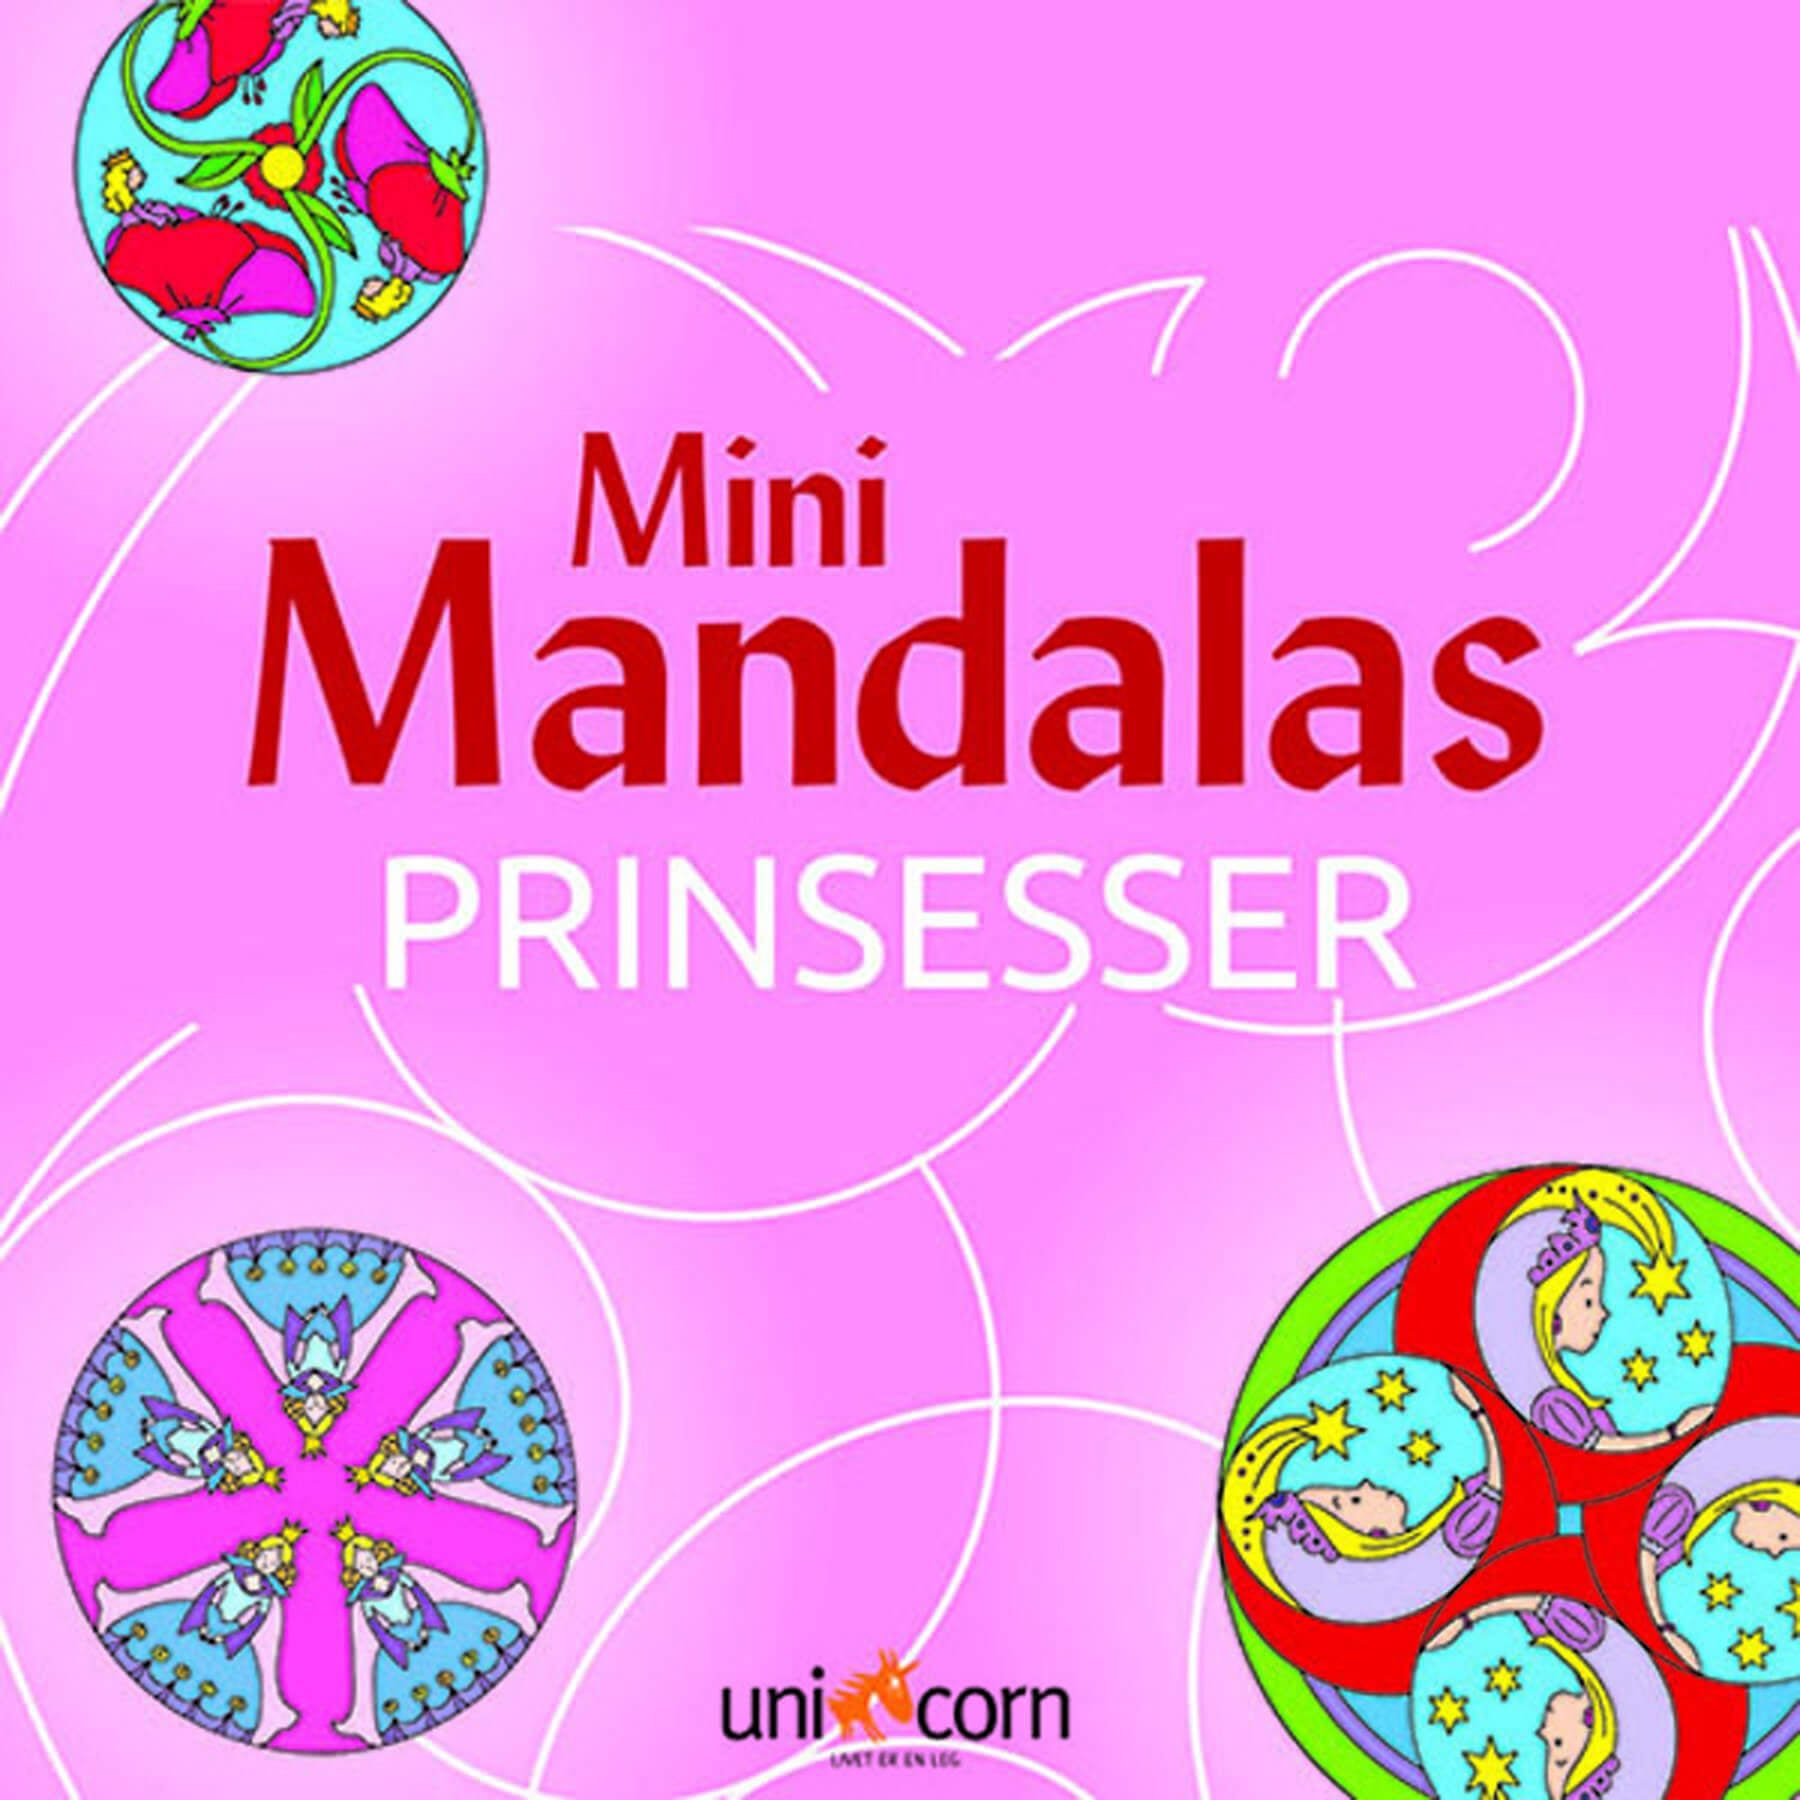 Mandalas - Mini Mandalas - Prinsesser